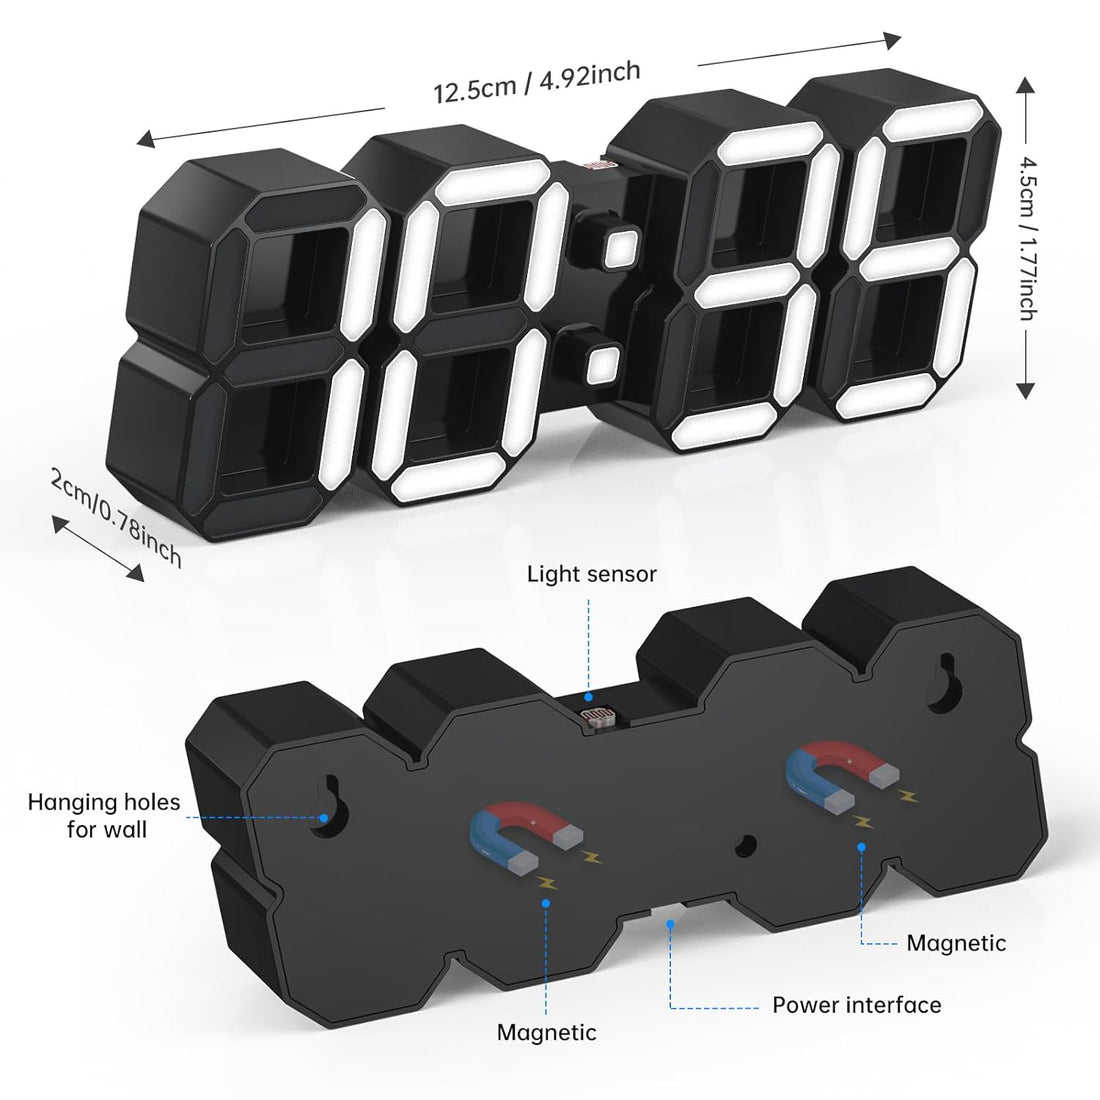 KWYDYP 4.9'' Mini LED Clock - Dual Alarm Clock with Remote, Magnetic, 12/24H, Date & Temp Display, Auto L1-L4 Brightness, Nightlight, Mini Design Digital Clock for Kids, Bedrooms, Offices - Black